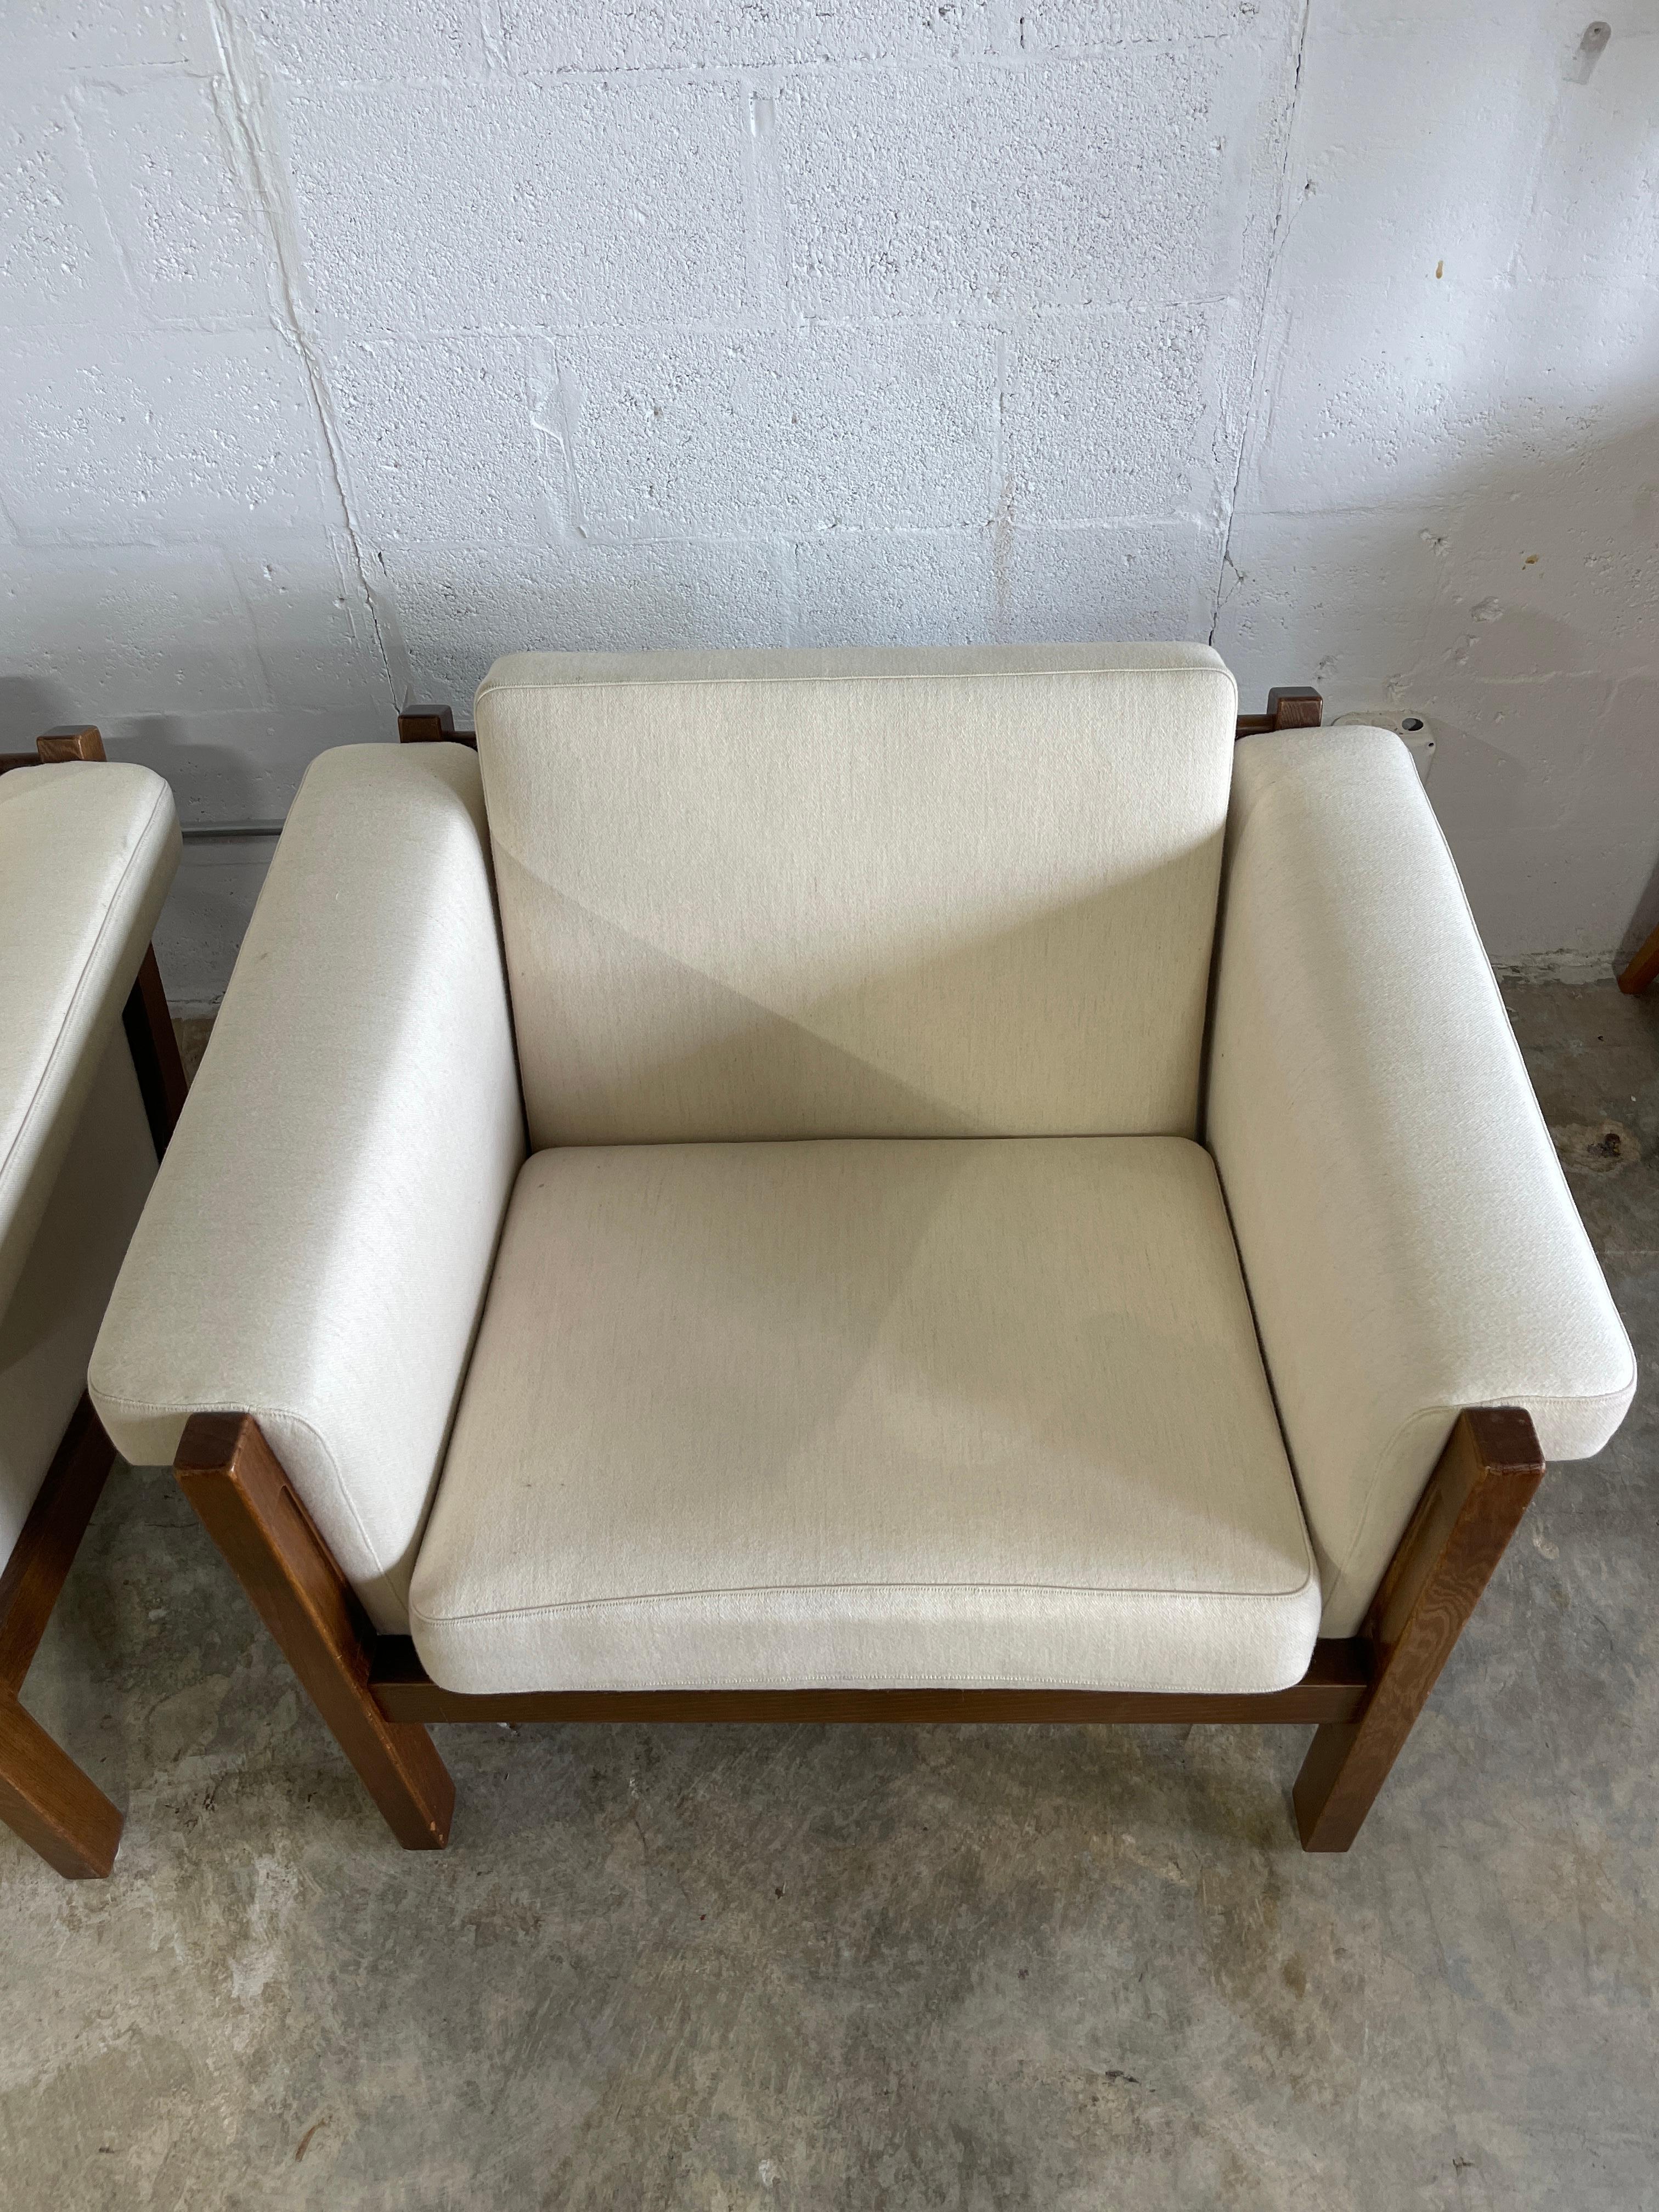 Hans Wegner Ge40 Getama Danish Modern of Lounge Chairs - a Pair For Sale 3